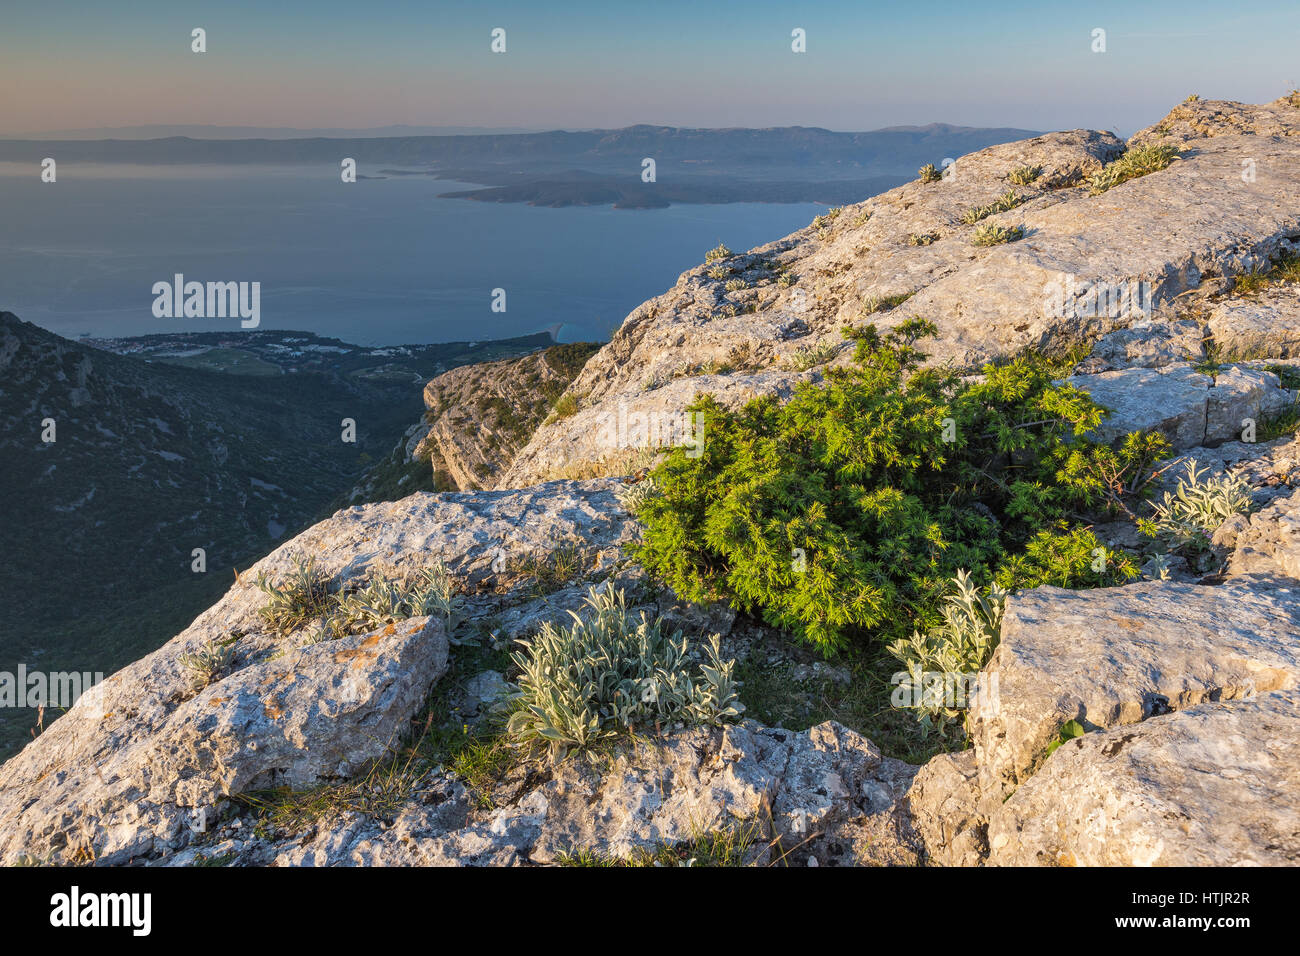 Bei Sonnenaufgang ist der felsige Gipfel des Berges Vidova Gora Pflanzen. Adria. Insel Brac. Kroatien. Europa. Stockfoto